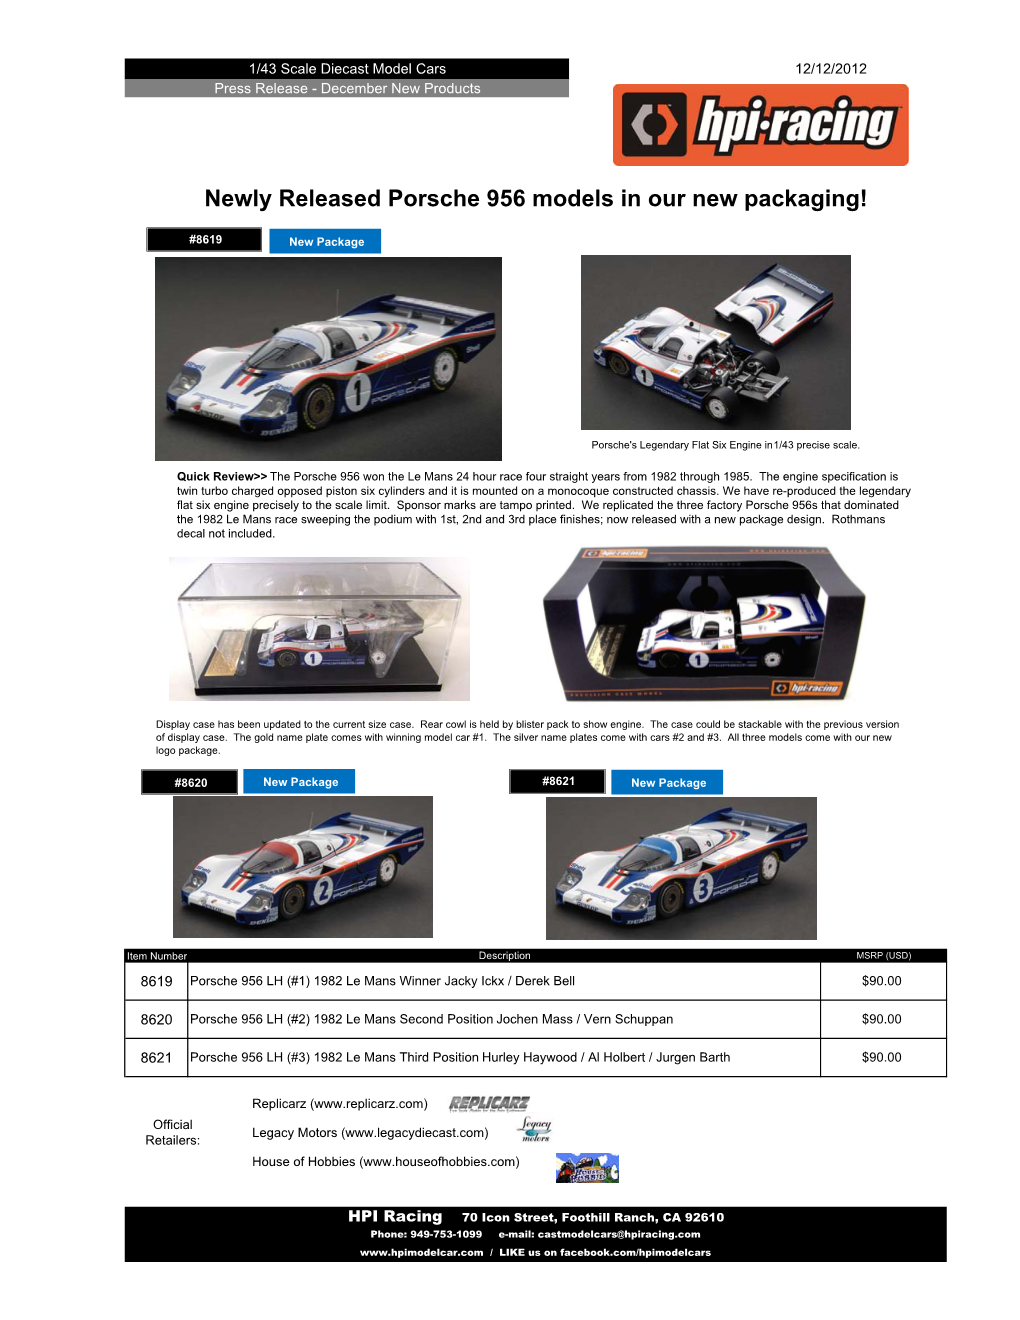 HPI-Racing Press Release